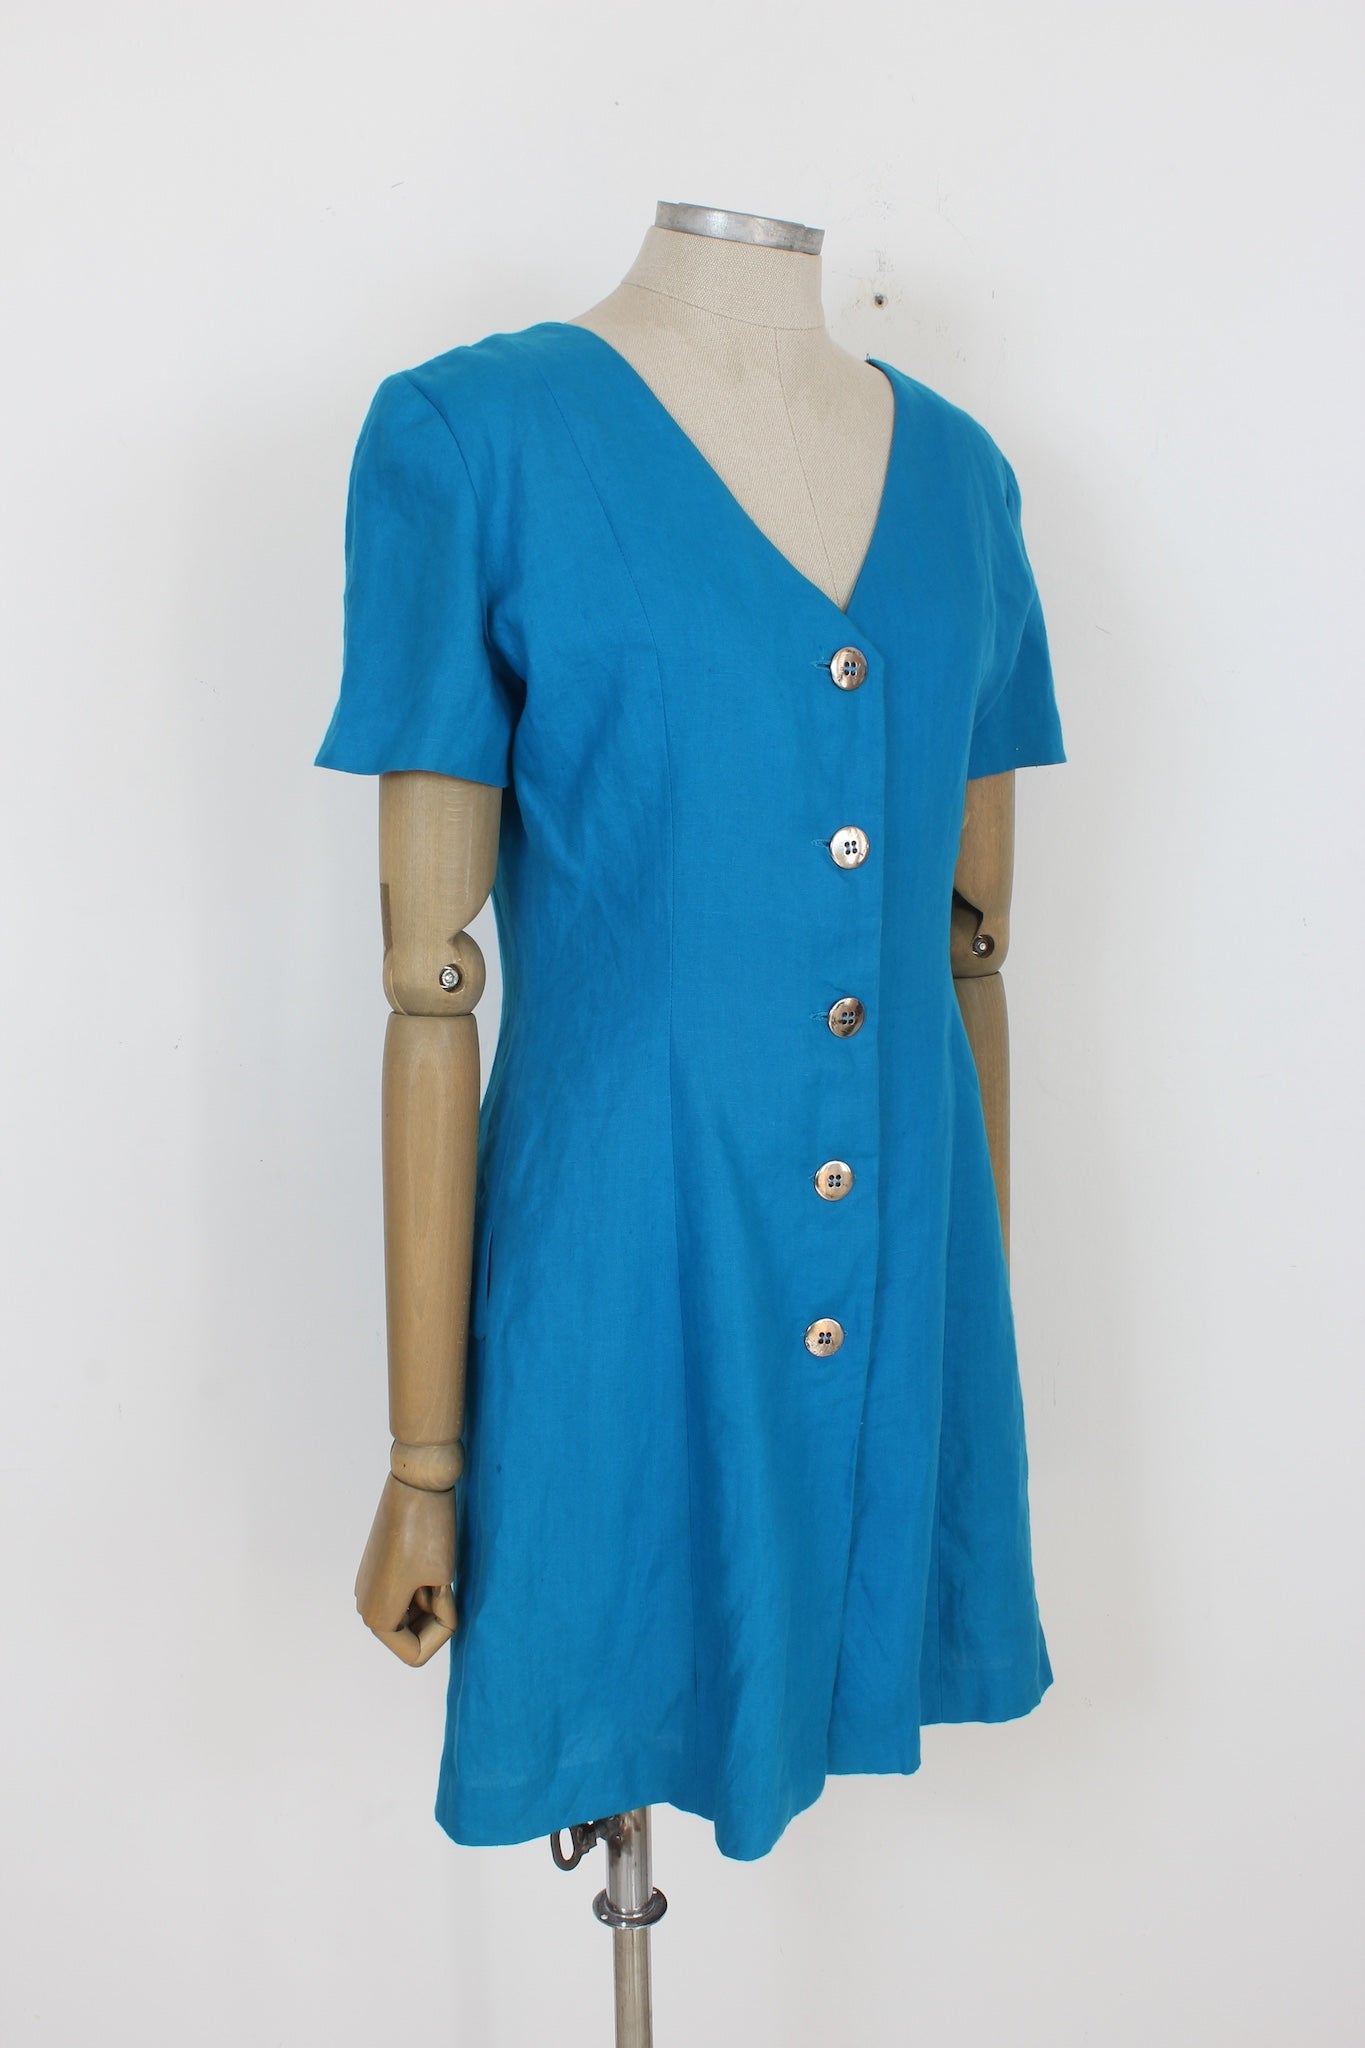 Nazareno Gabrielli Blue Linen Sheath Dress Vintage 80s